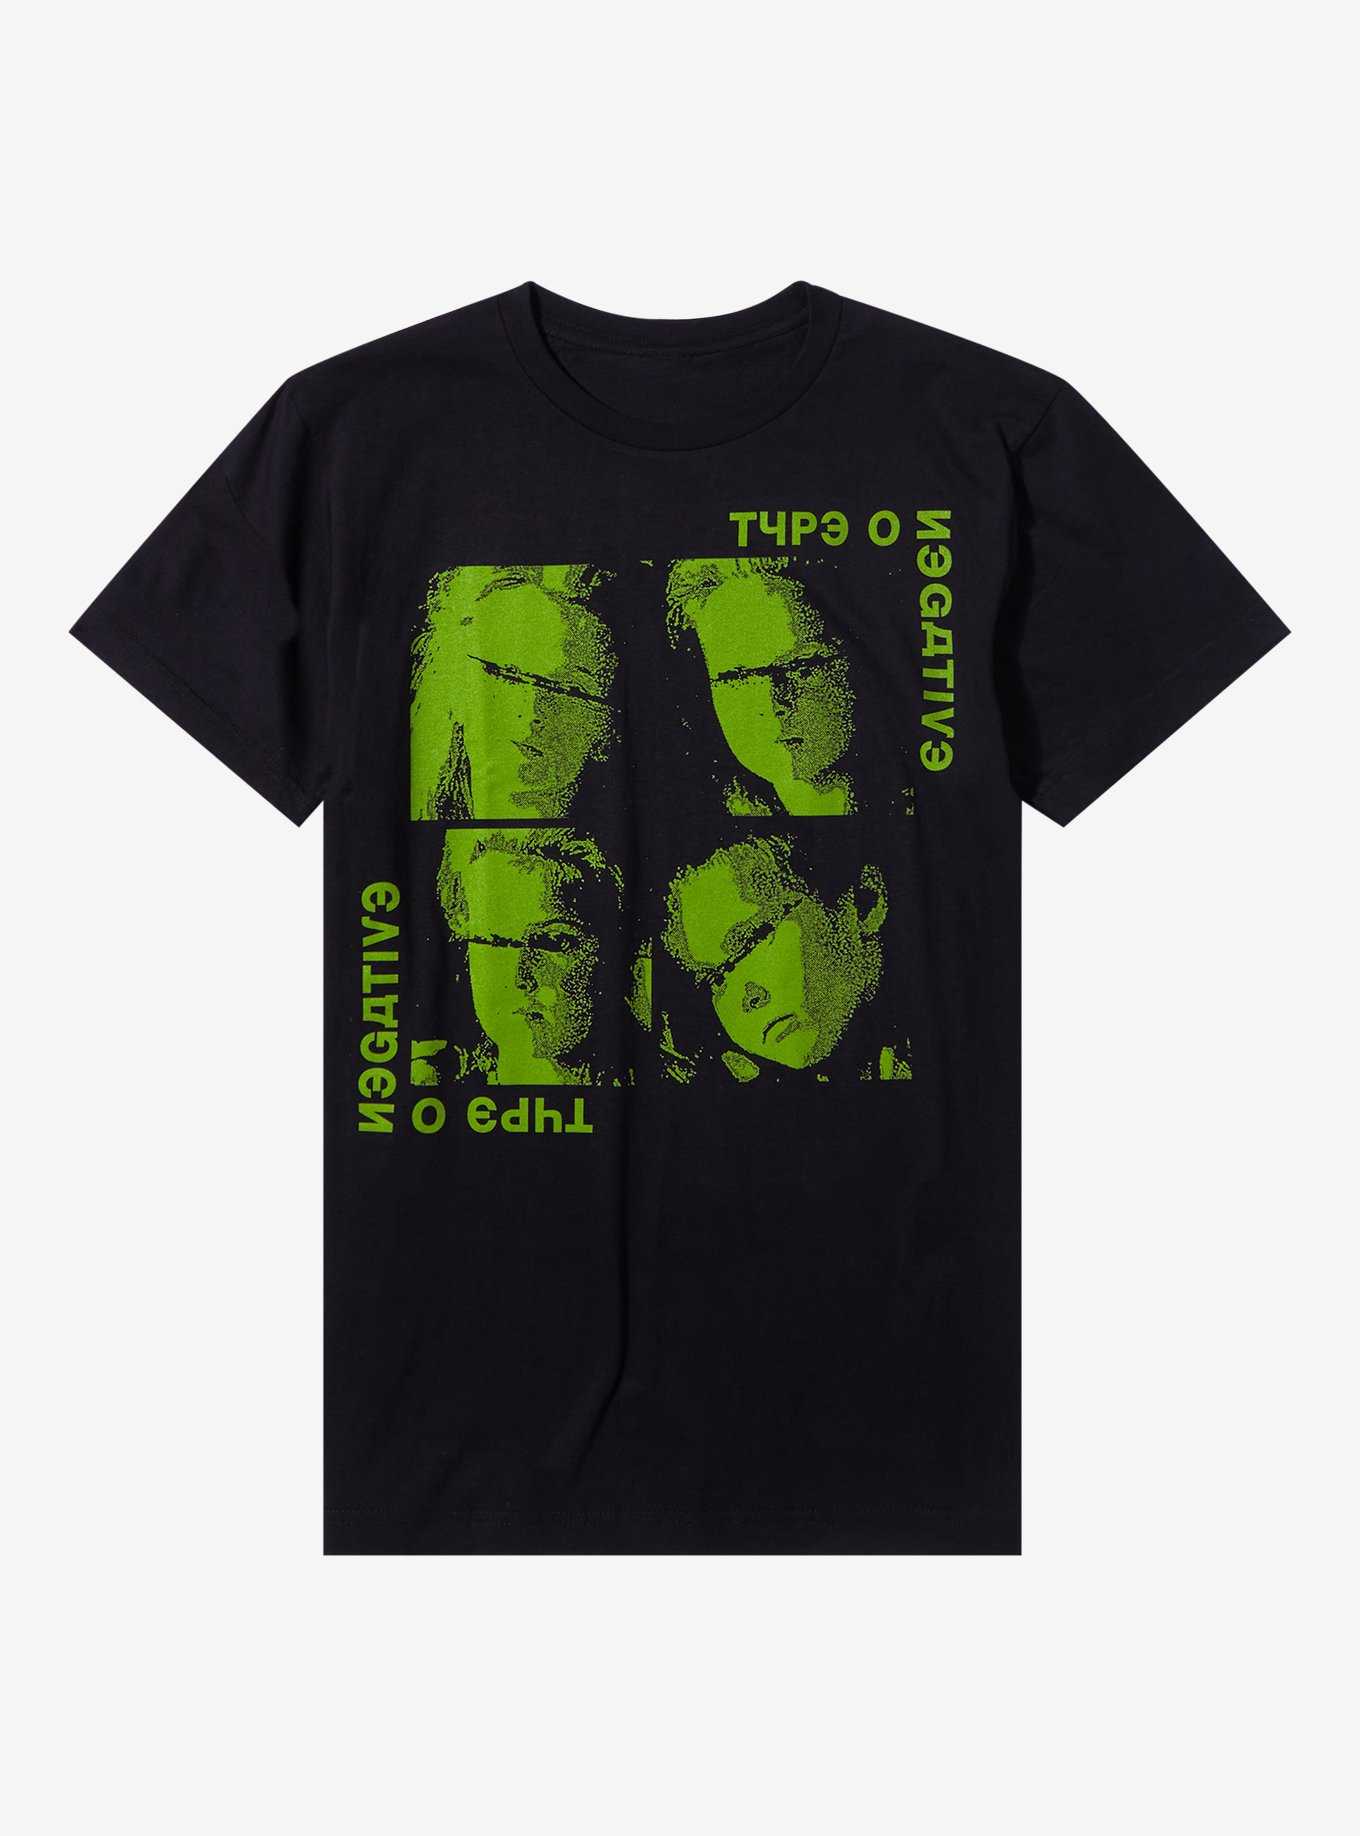 Get Type O Negative Shirt For Free Shipping • Custom Xmas Gift